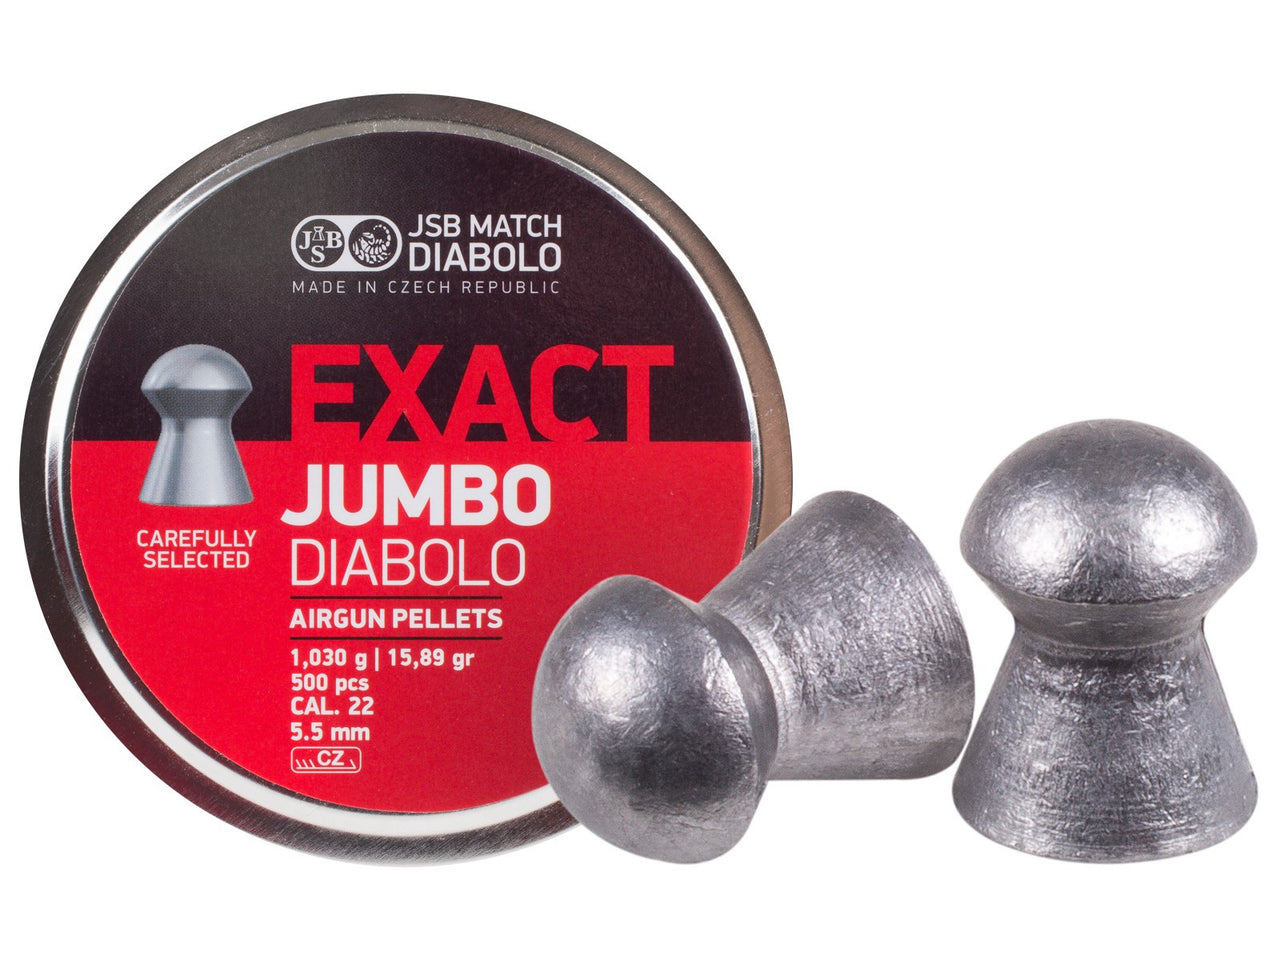 JSB Match Diabolo Exact Jumbo | .22 Cal | 15.89 Grains | 500 Ct